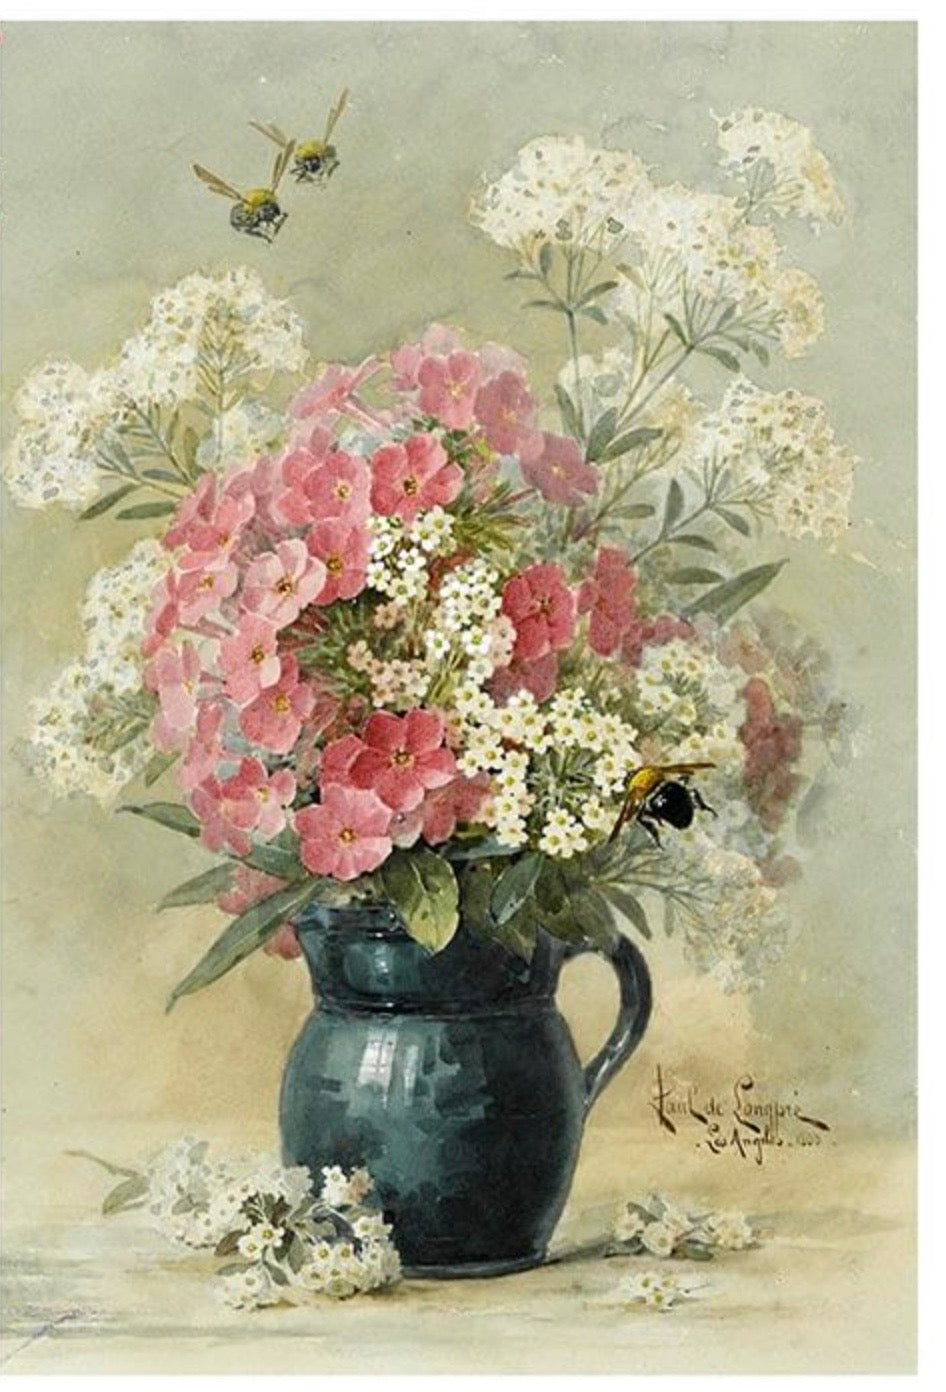 Paper Designs Rice Paper Floral Bouquet in Vase #0320